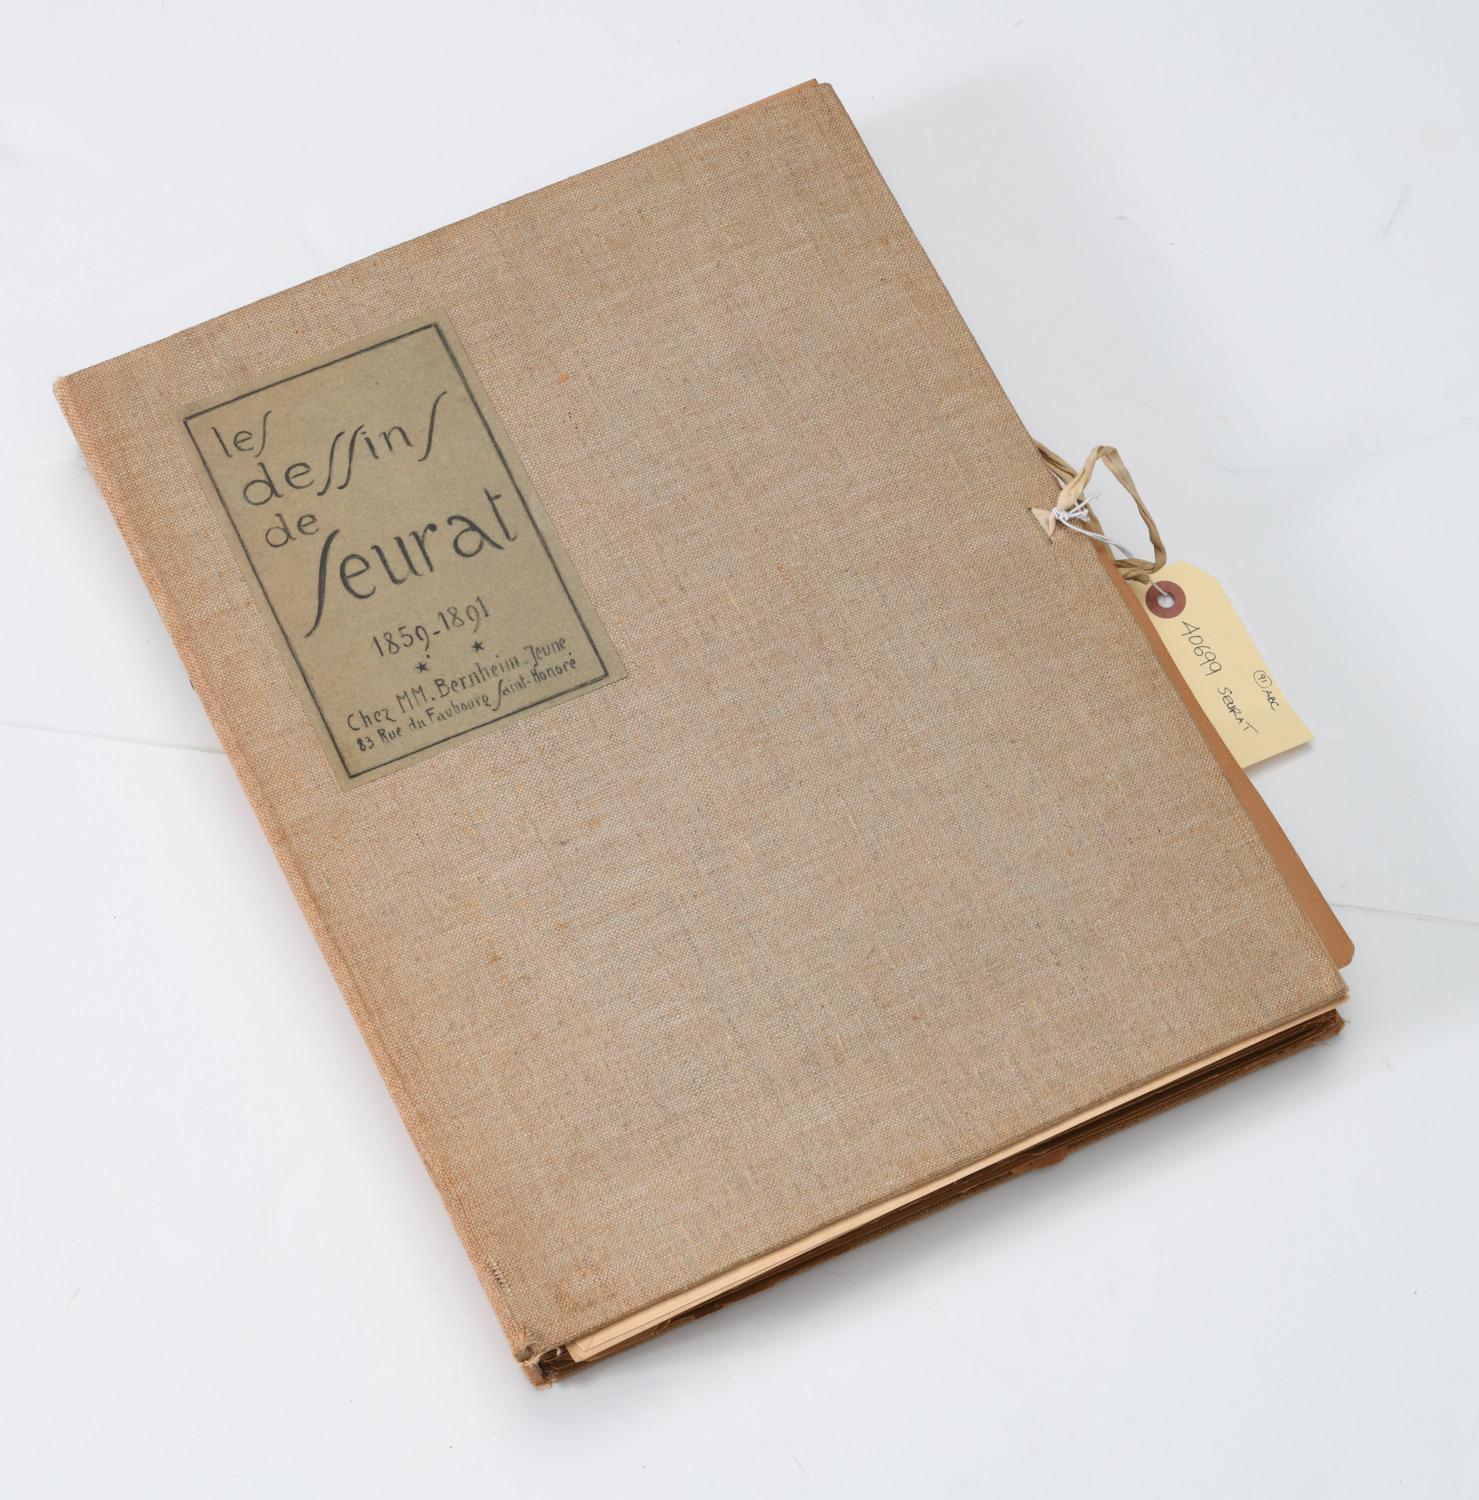 Les Dessins de Georges Seurat (1859-1891), folio Volume II, MM. Bernheim-Jeune, Paris, 1926. Loose pages in a hardcover folding case with cloth ties, 11.5